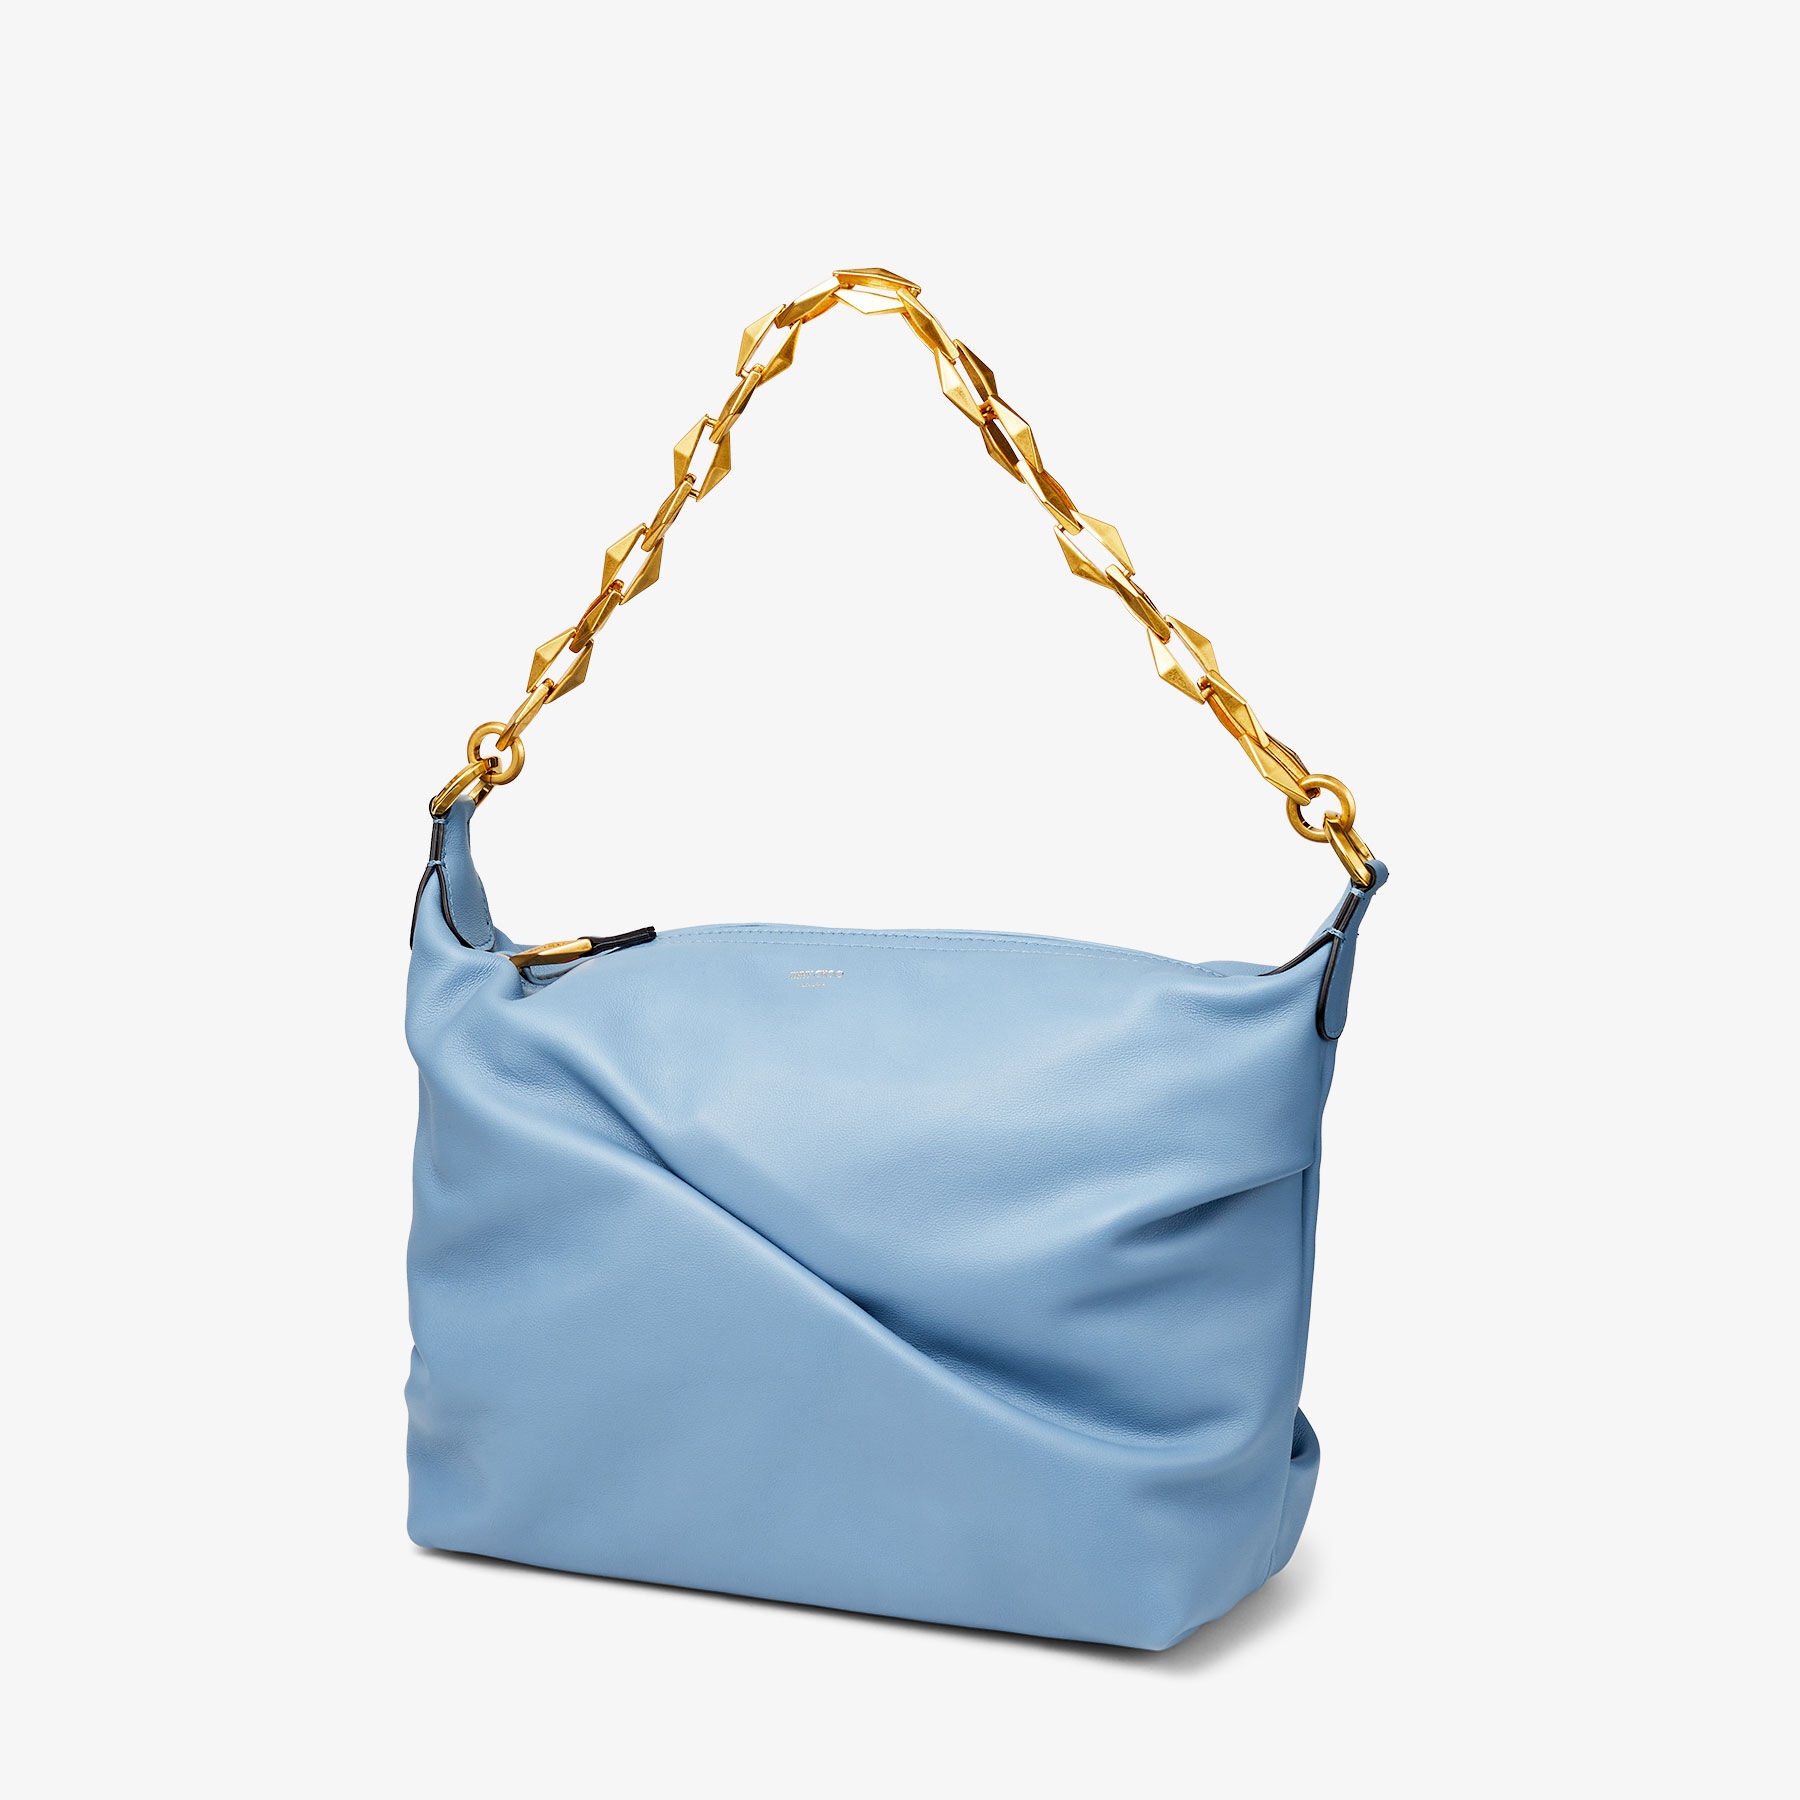 Diamond Soft Hobo S
Smoky Blue Soft Calf Leather Hobo Bag with Chain Strap - 6